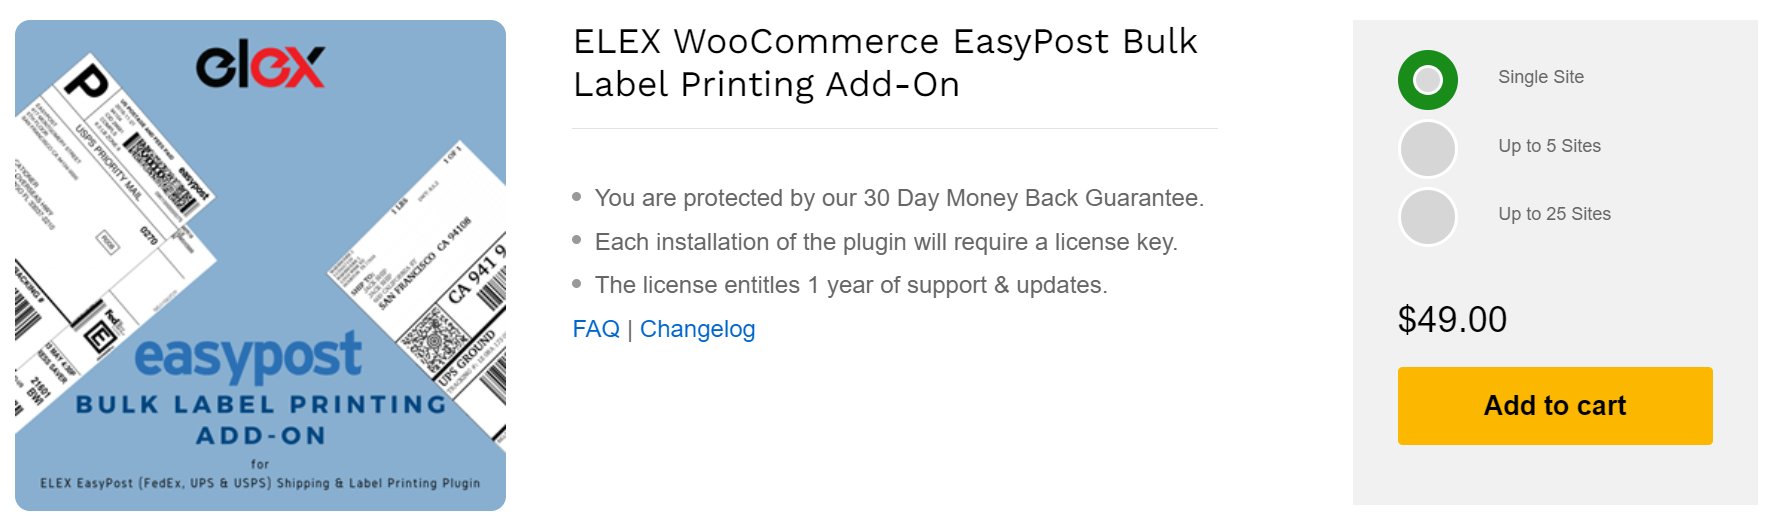 ELEX WooCommerce EasyPost Bulk Label Printing Add-On